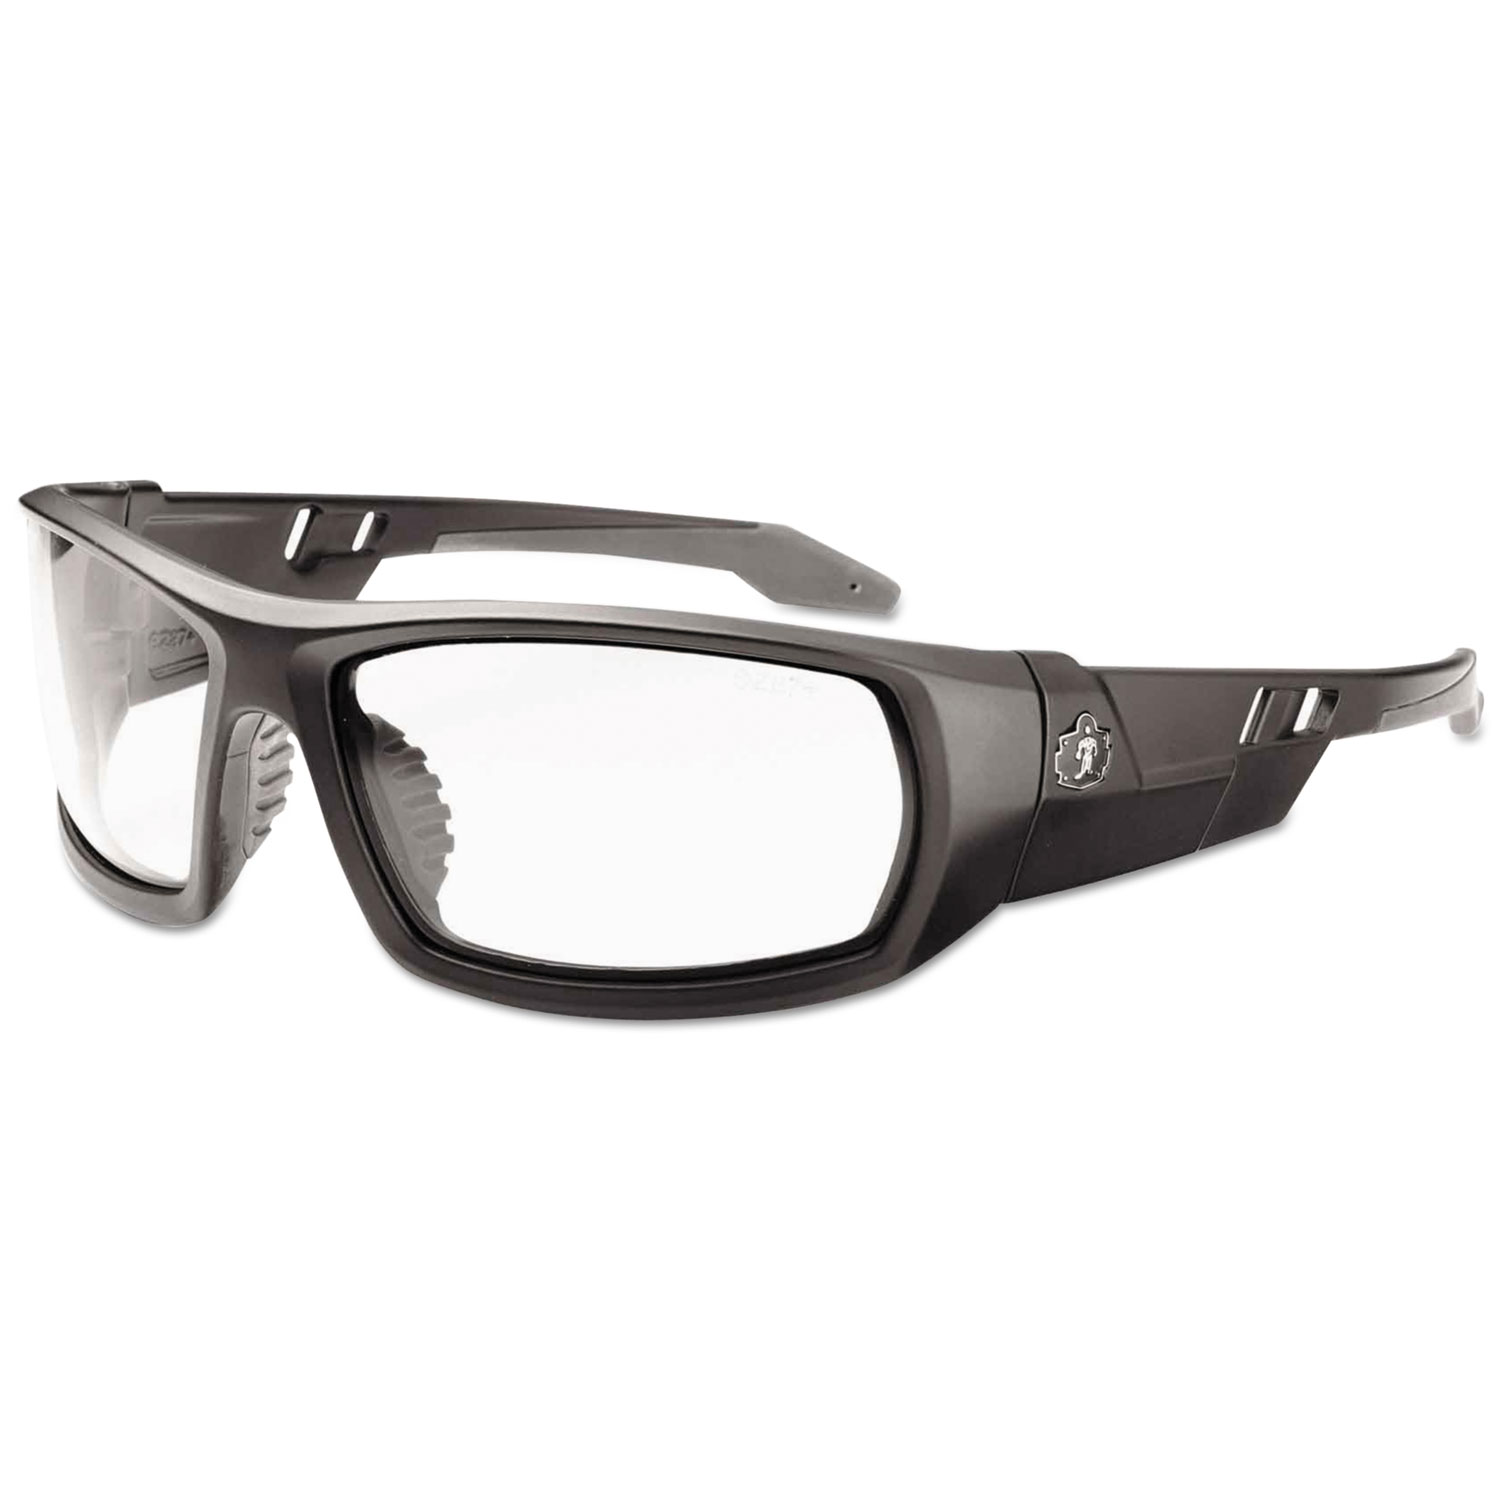 Skullerz Odin Safety Glasses, Matte Black Frame/Clear Lens, Nylon/Polycarb